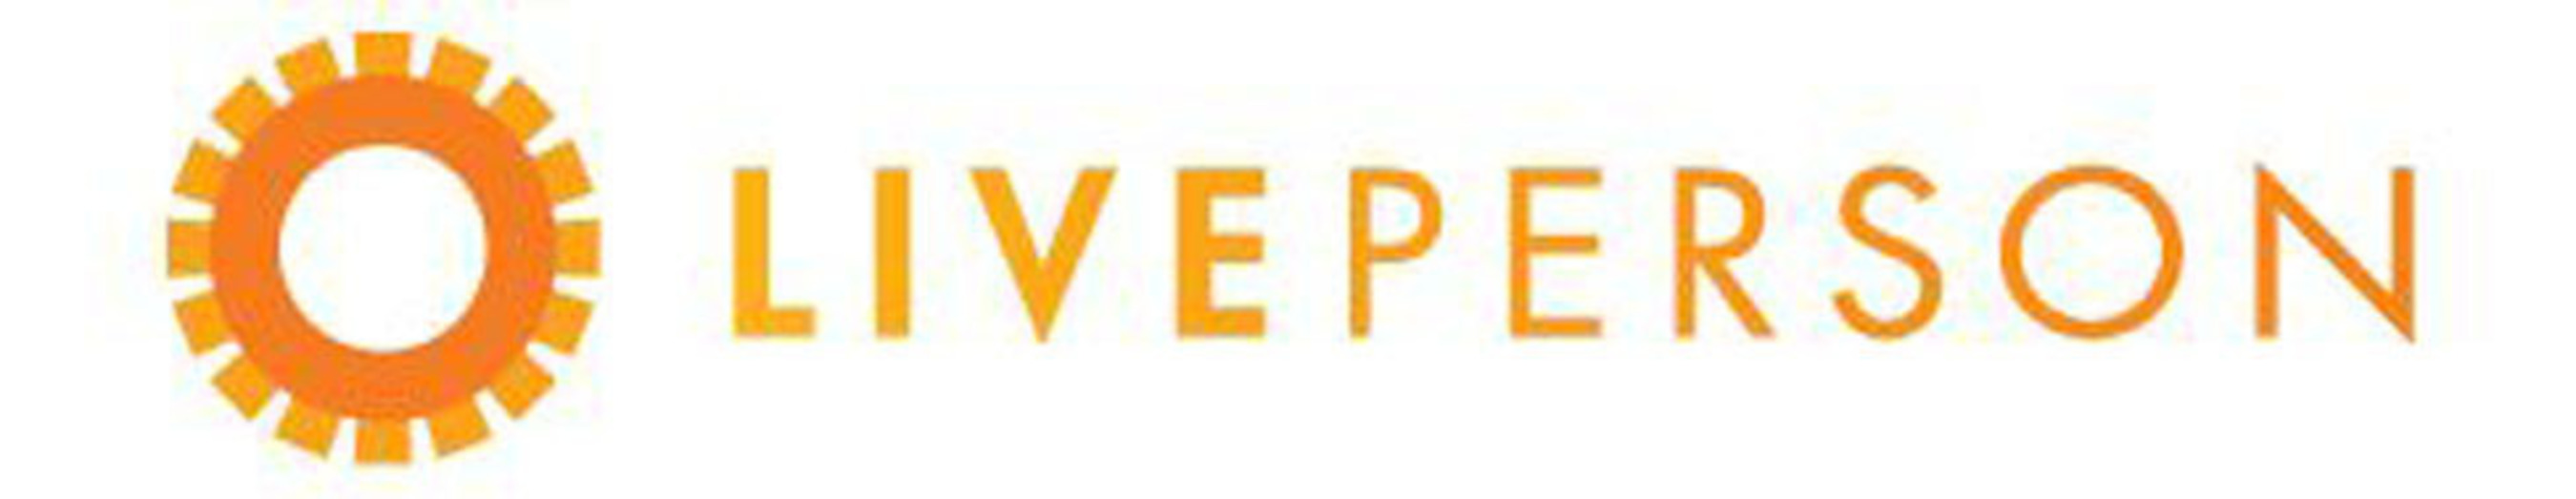 LivePerson Logo.